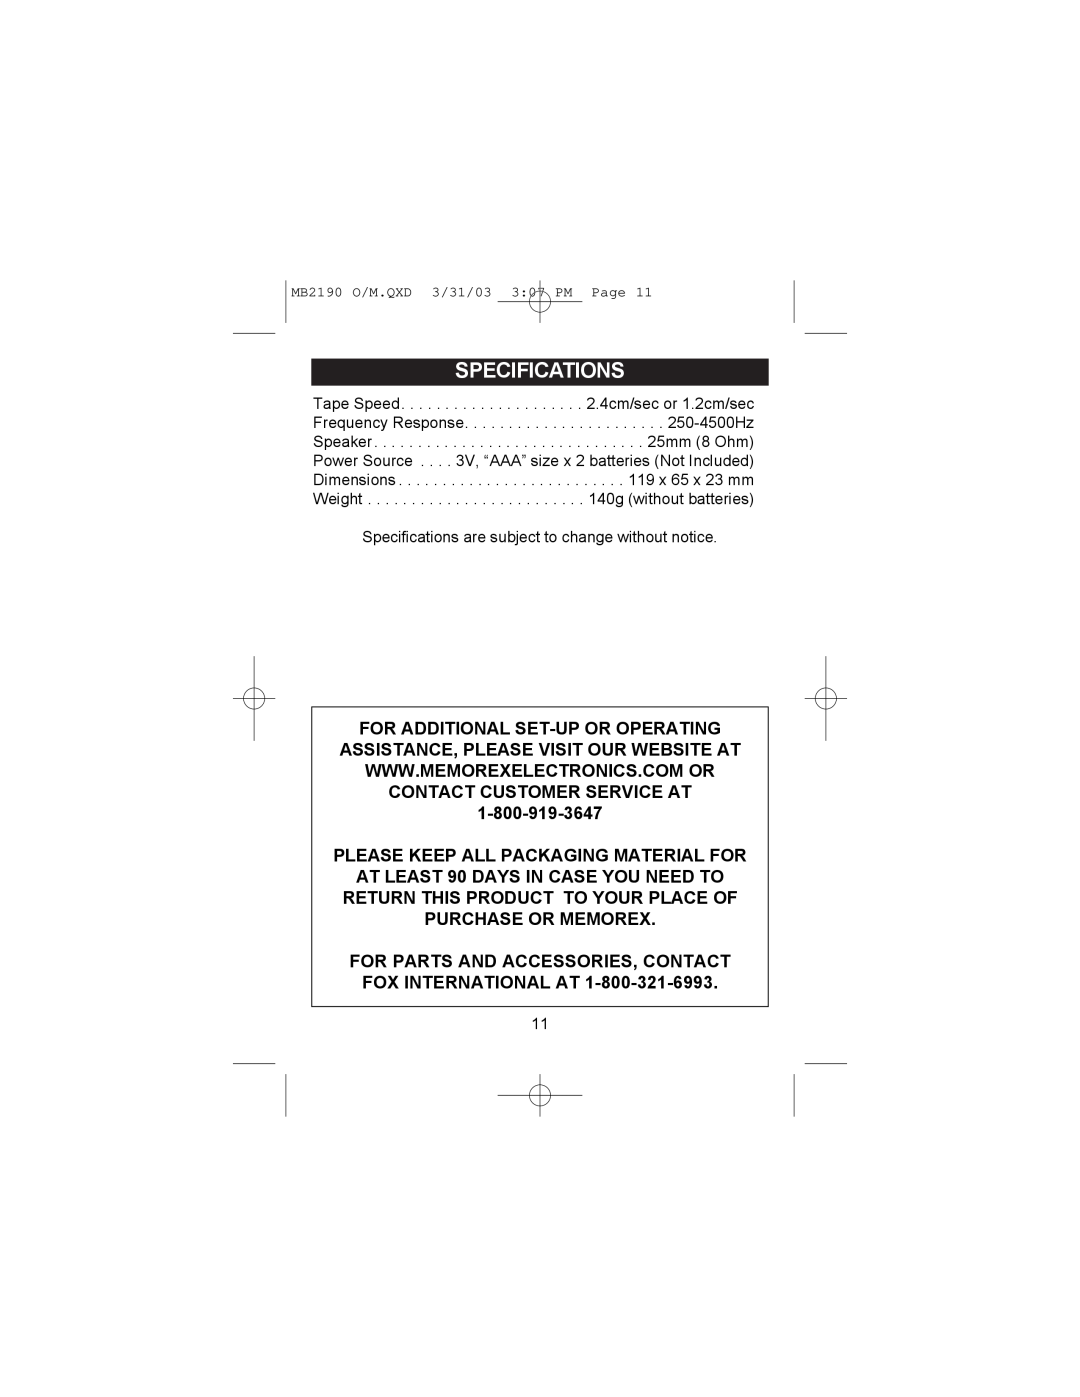 Memorex MB2190 manual Specifications 